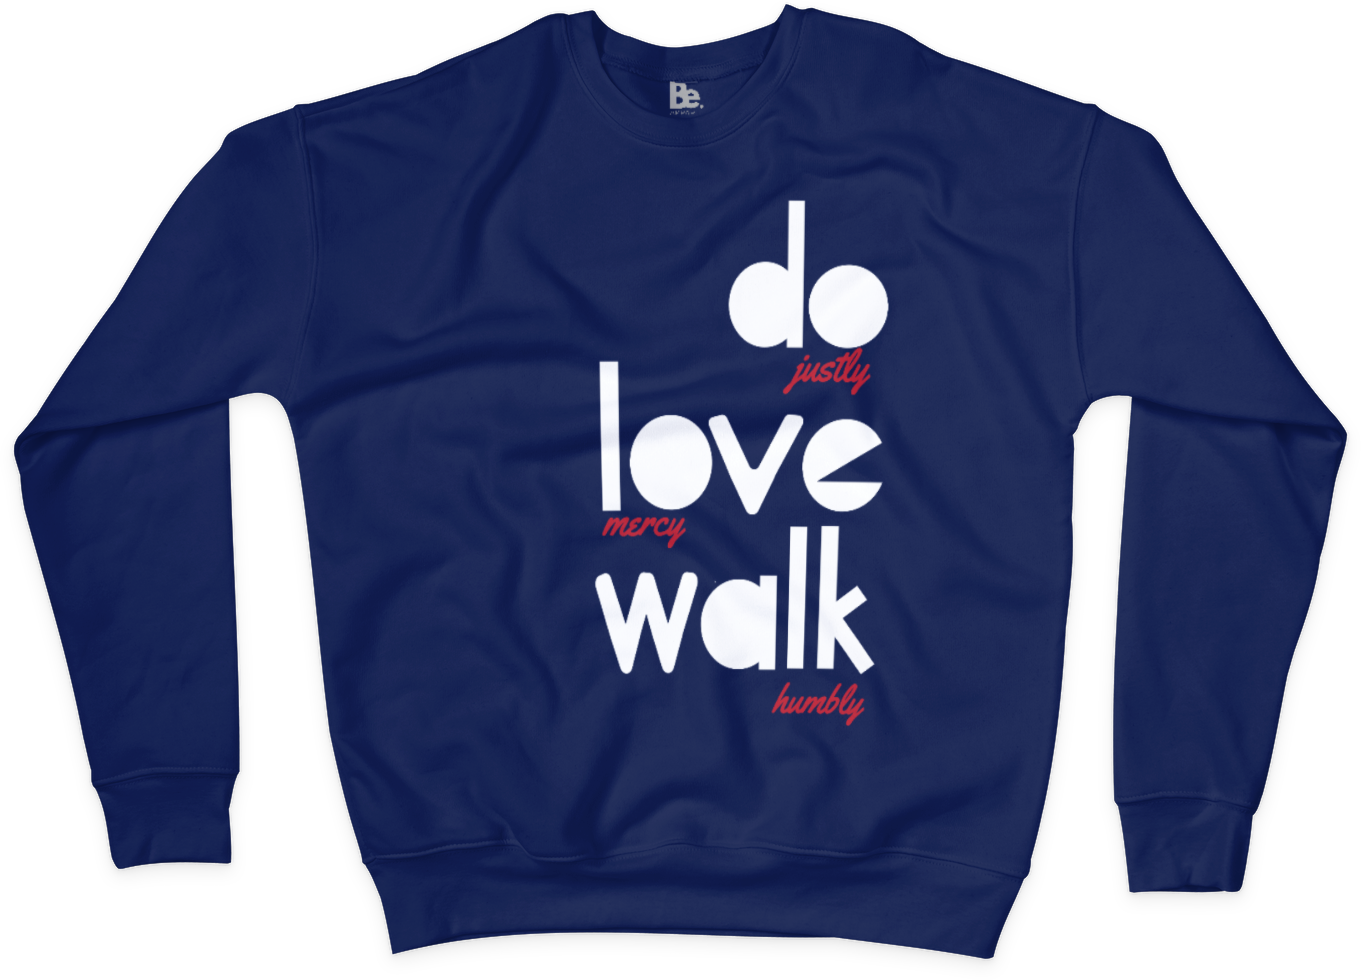 Do, Love, Walk Sweatshirt (UNISEX)